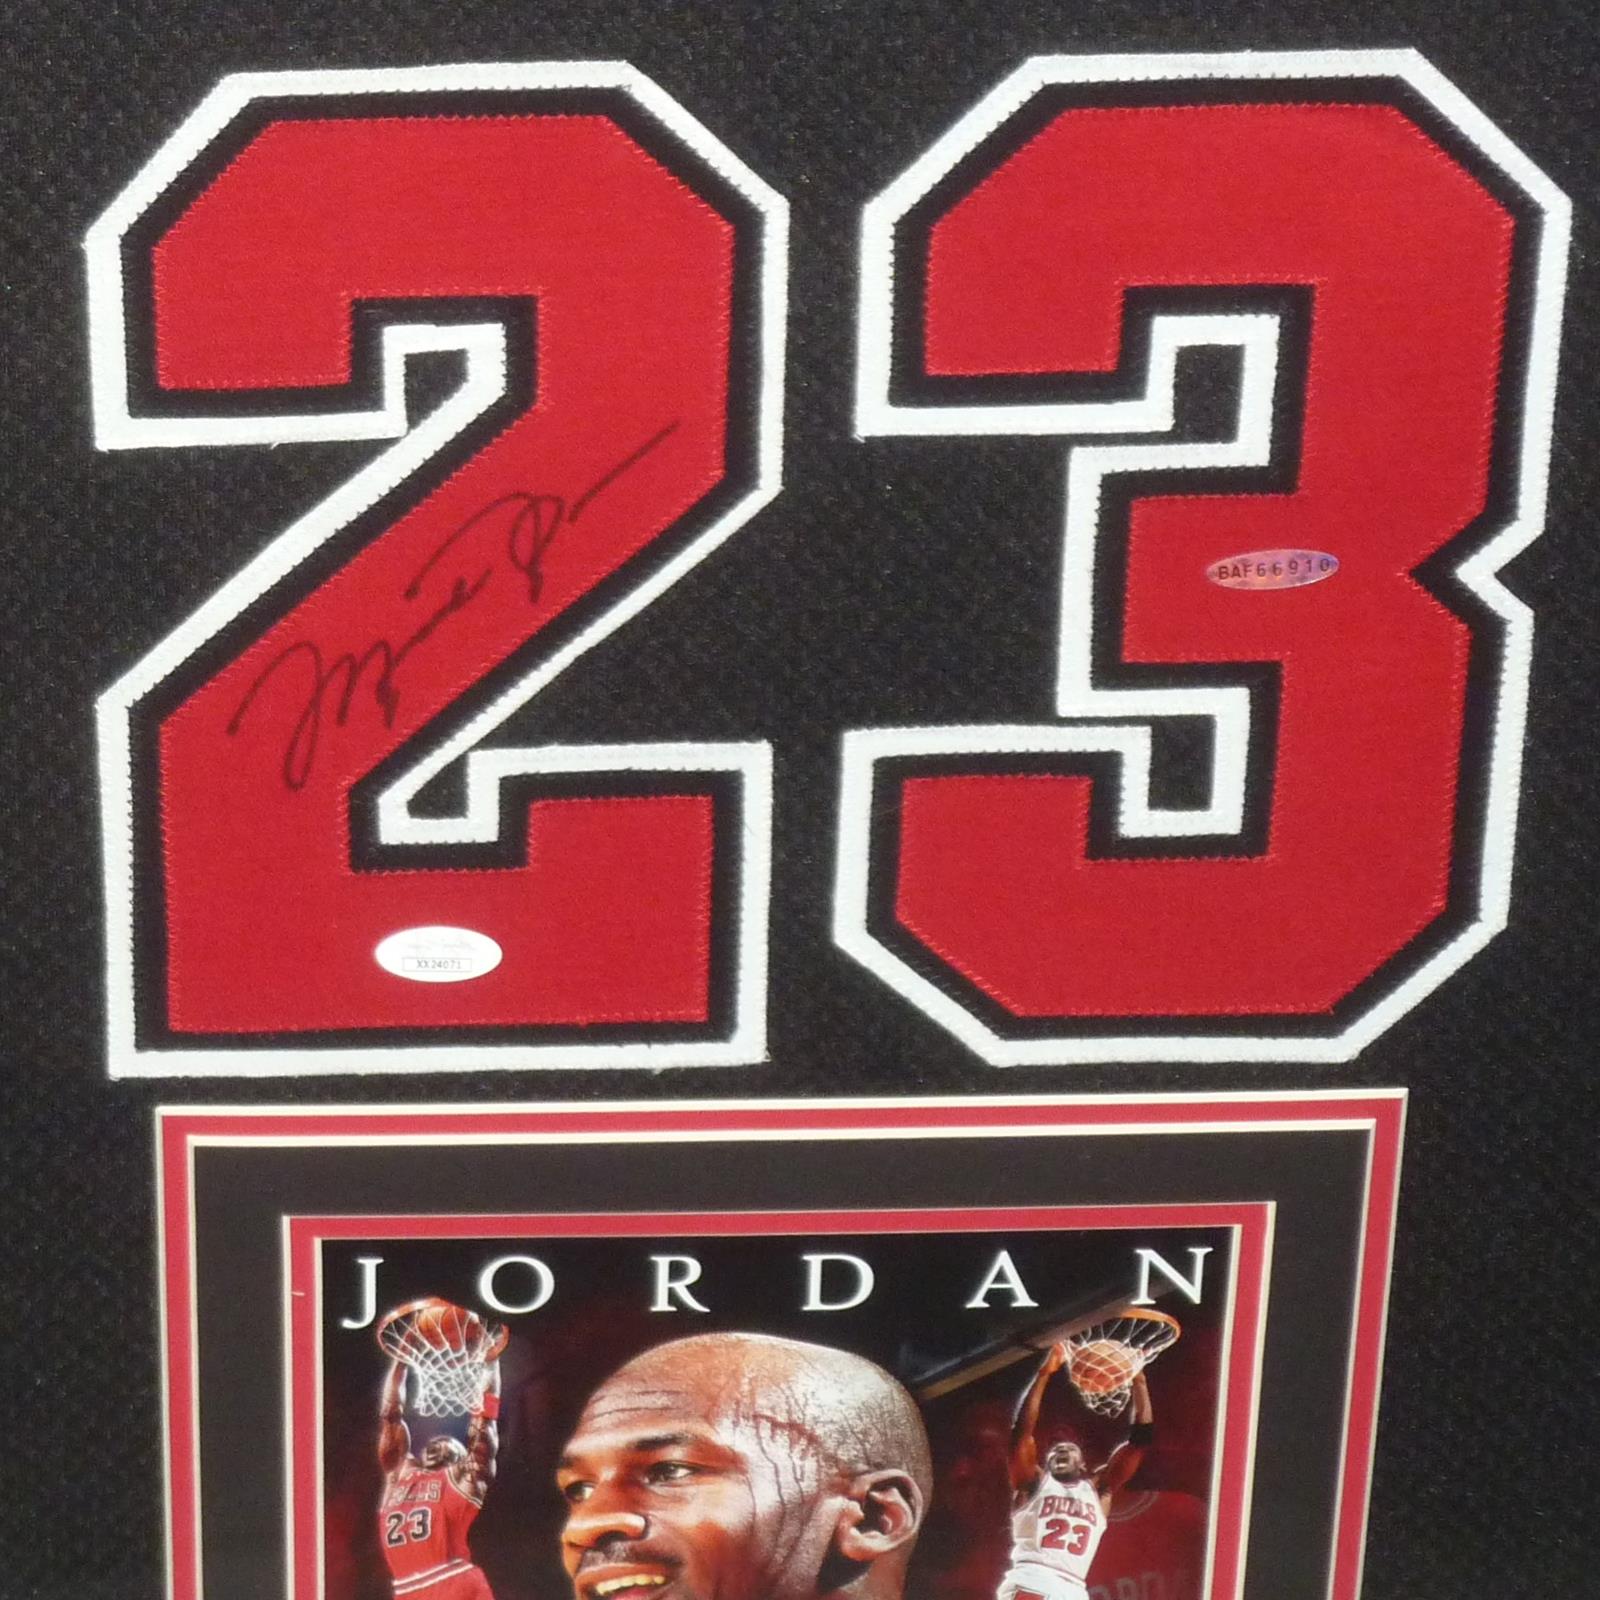 Michael Jordan Signed Chicago Bulls Black Jersey - UDA on Goldin